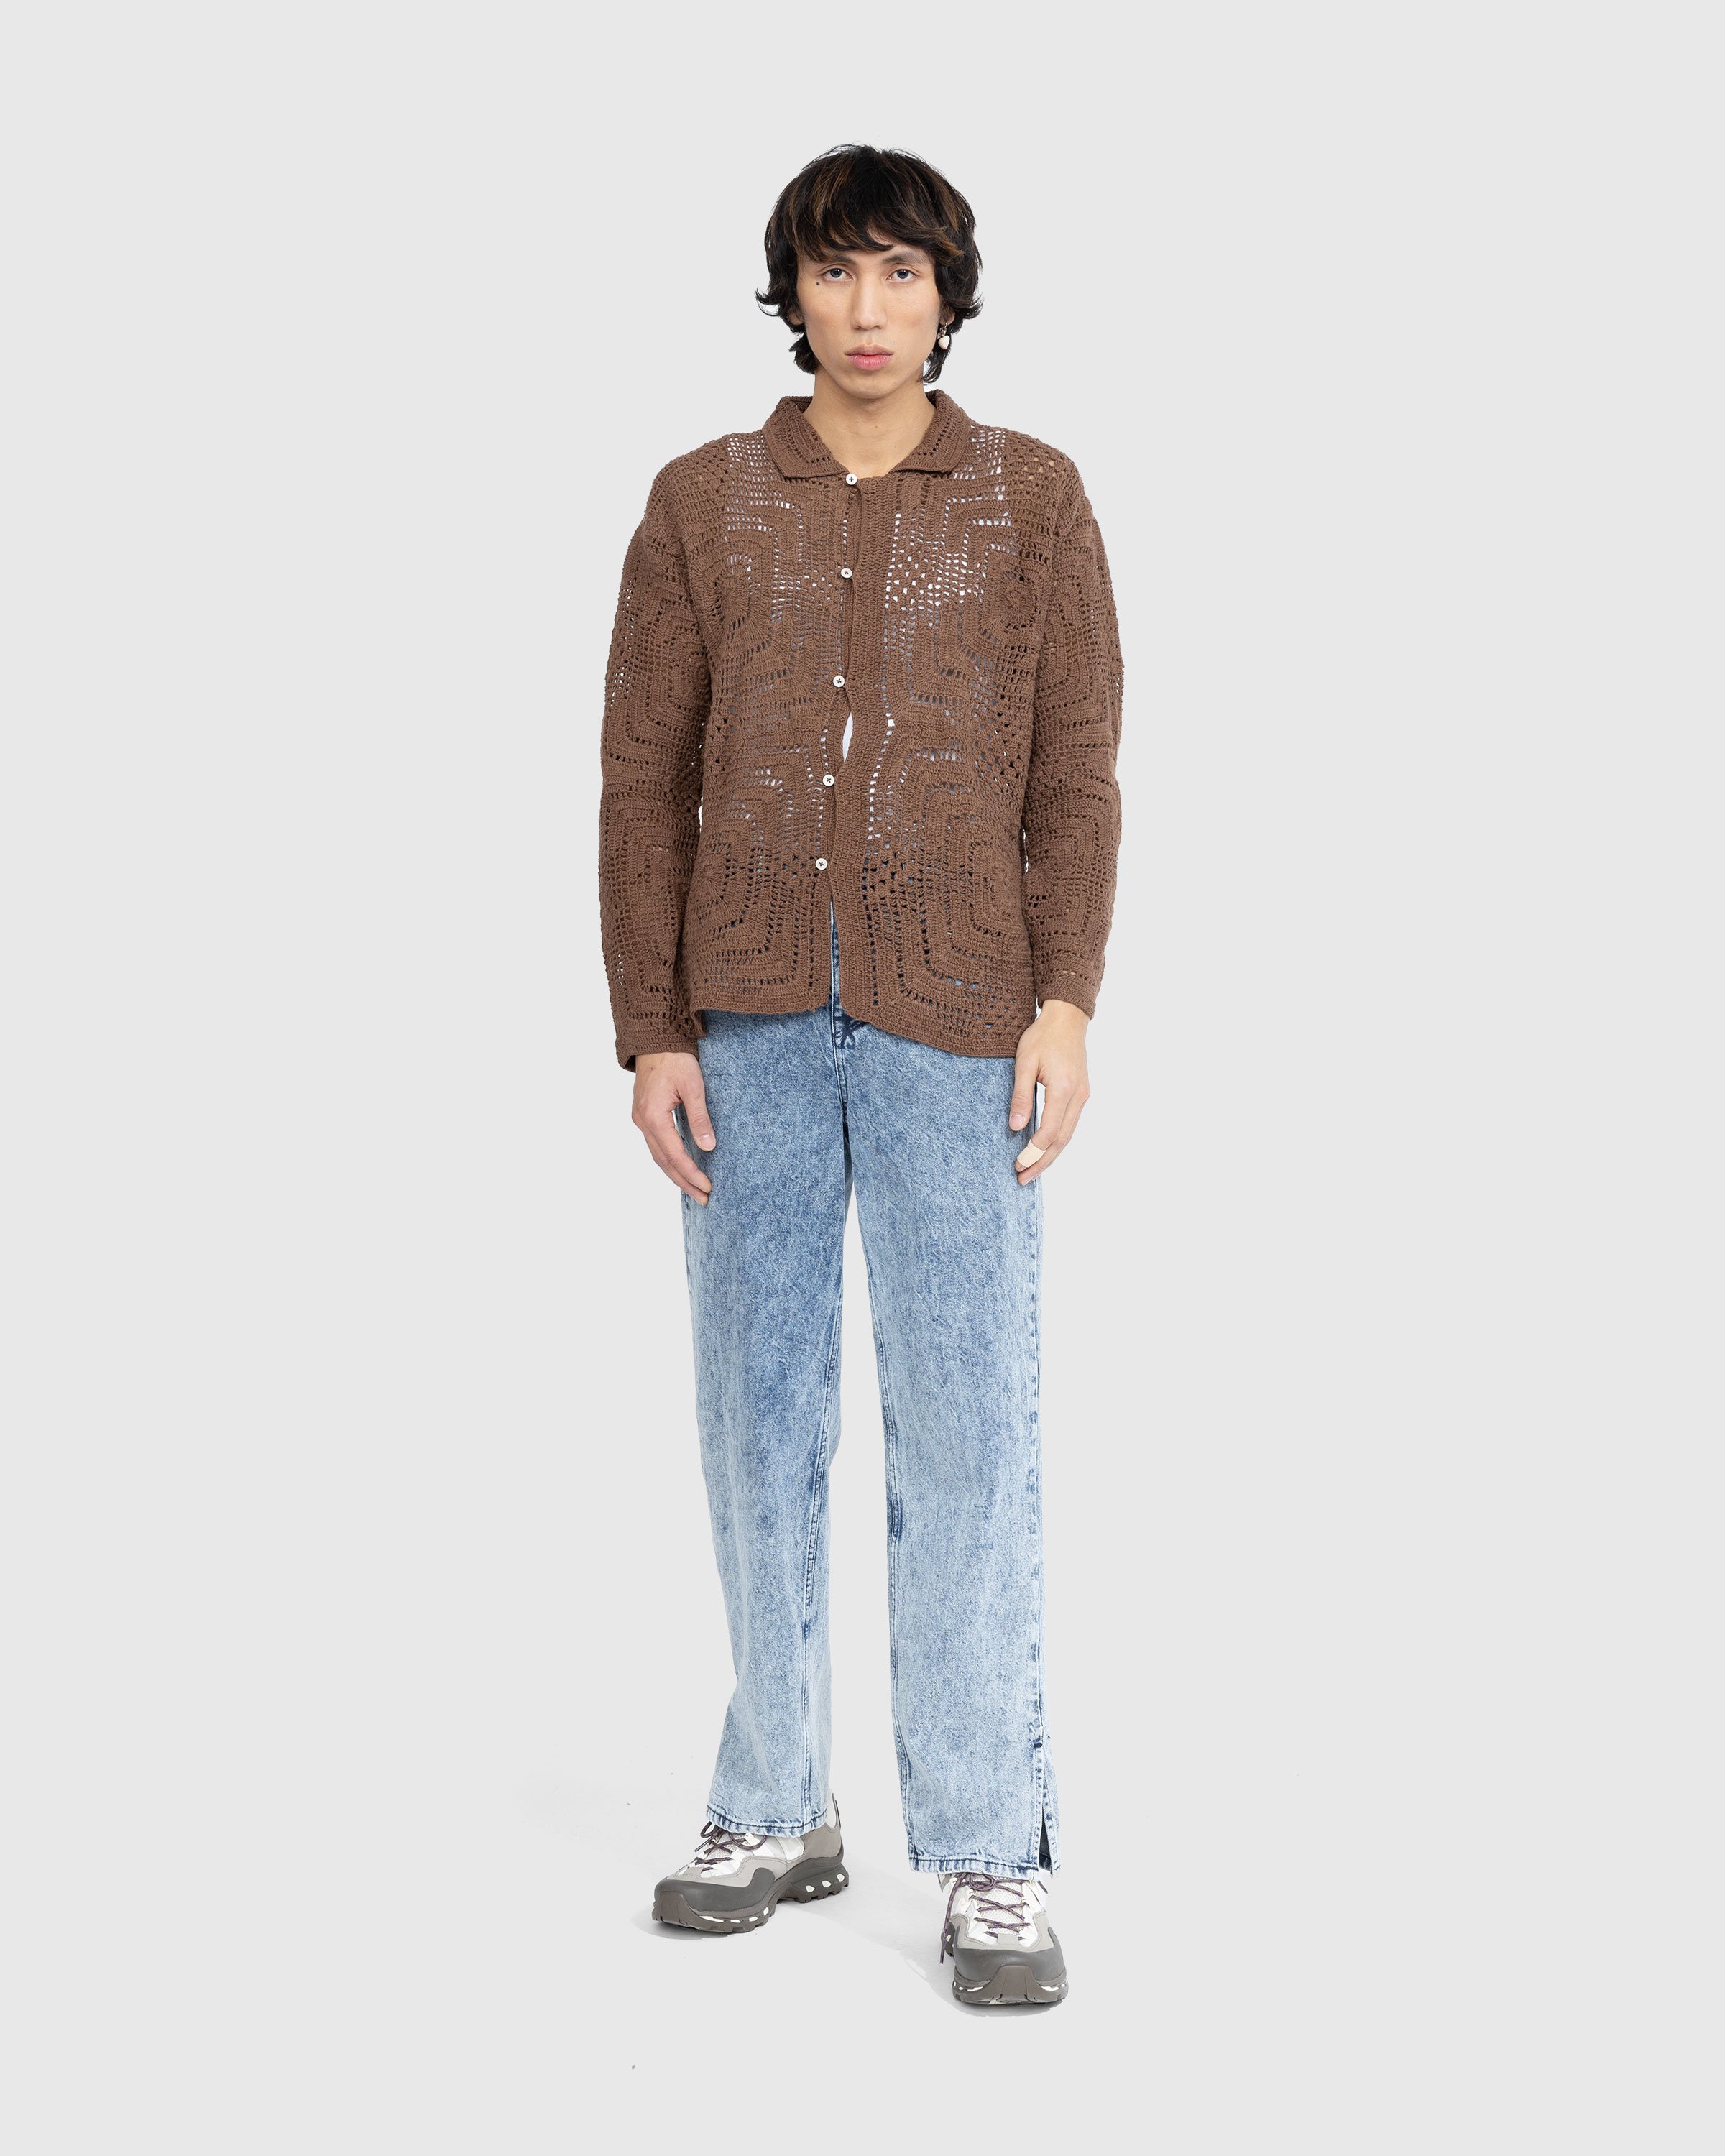 Bode - Overdye Crochet Shirt Brown - Longsleeve Shirts - BROWN - Image 3